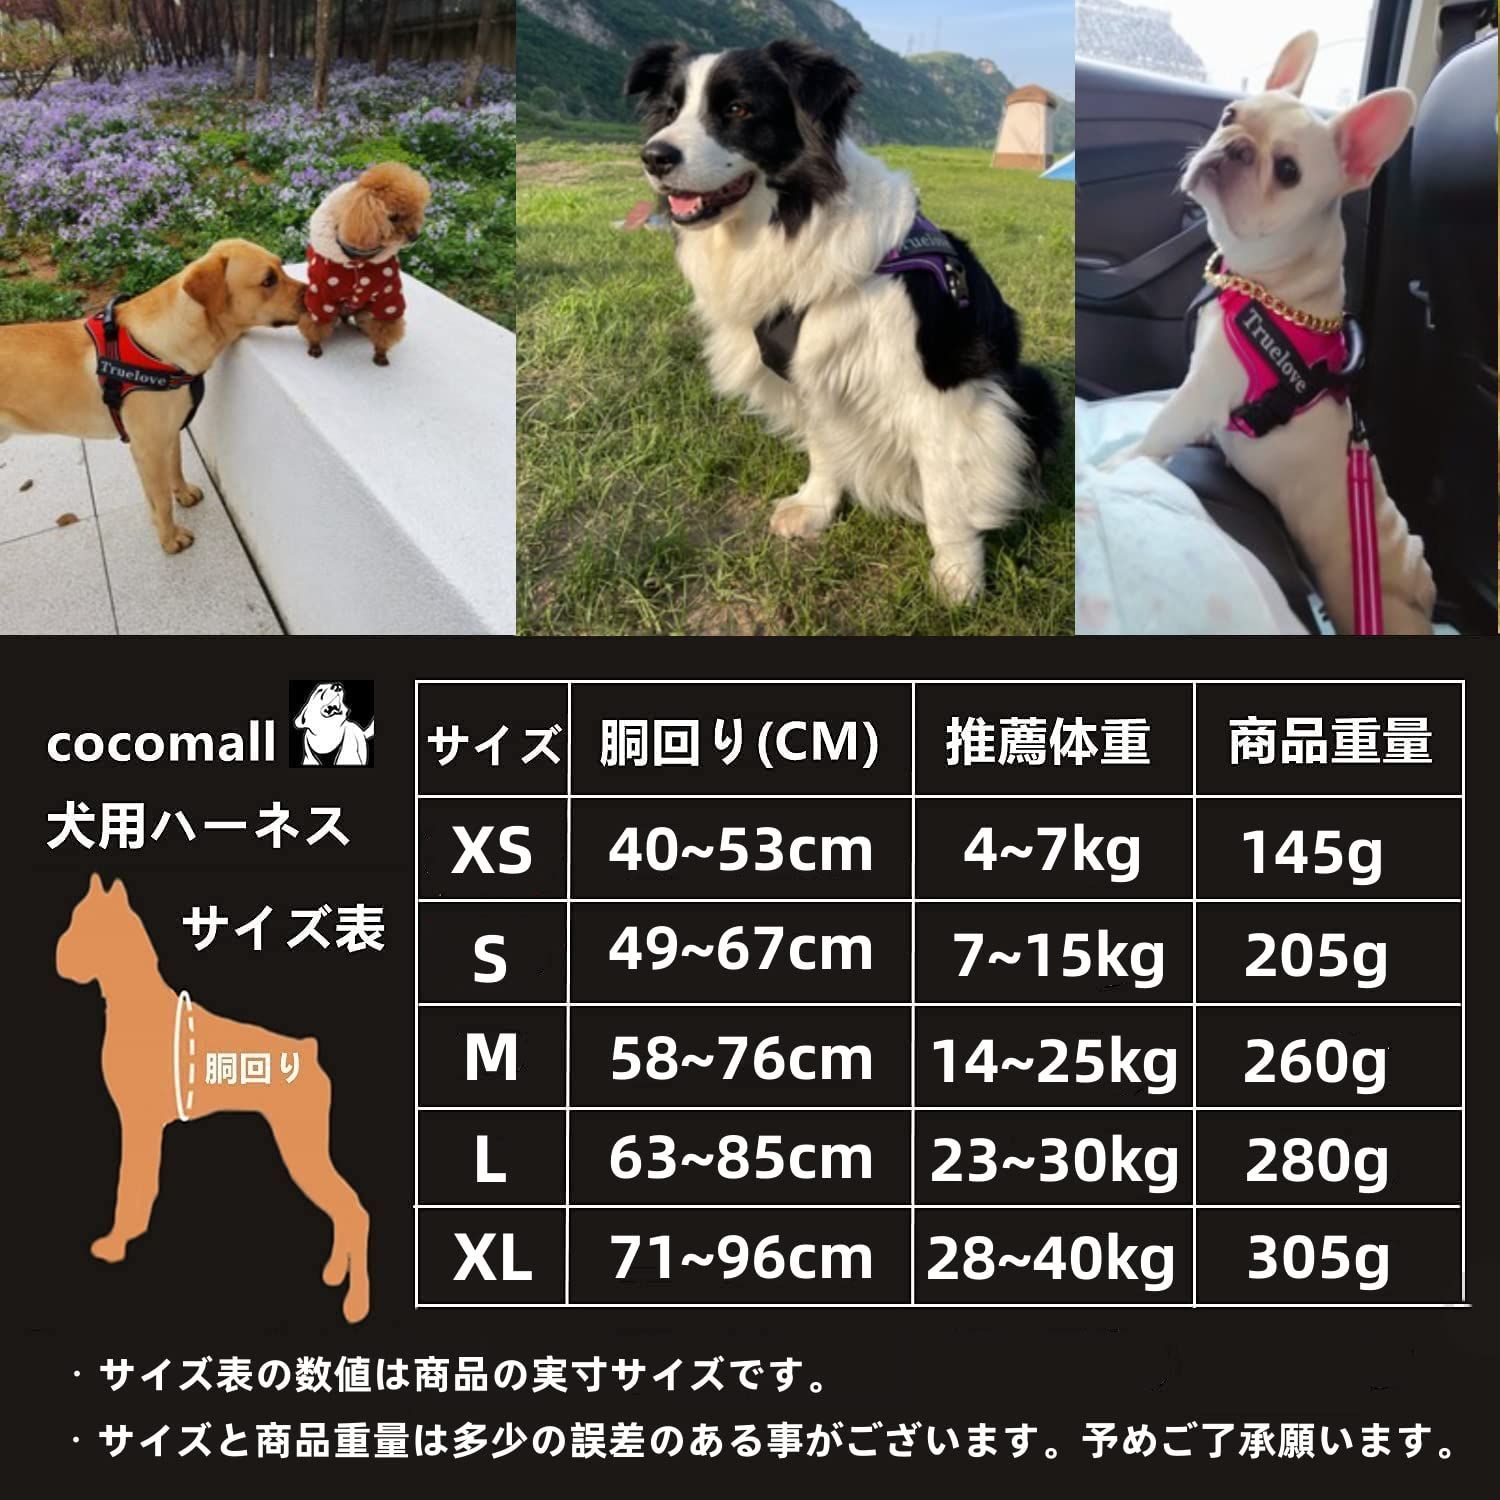 cocomall 犬用ハーネス 犬用胴輪 ドッグ ペット用品 ハーネス 3M反射材料 訓練 ナイロン製 小型犬、中型犬、大型犬に向け 通気性 調